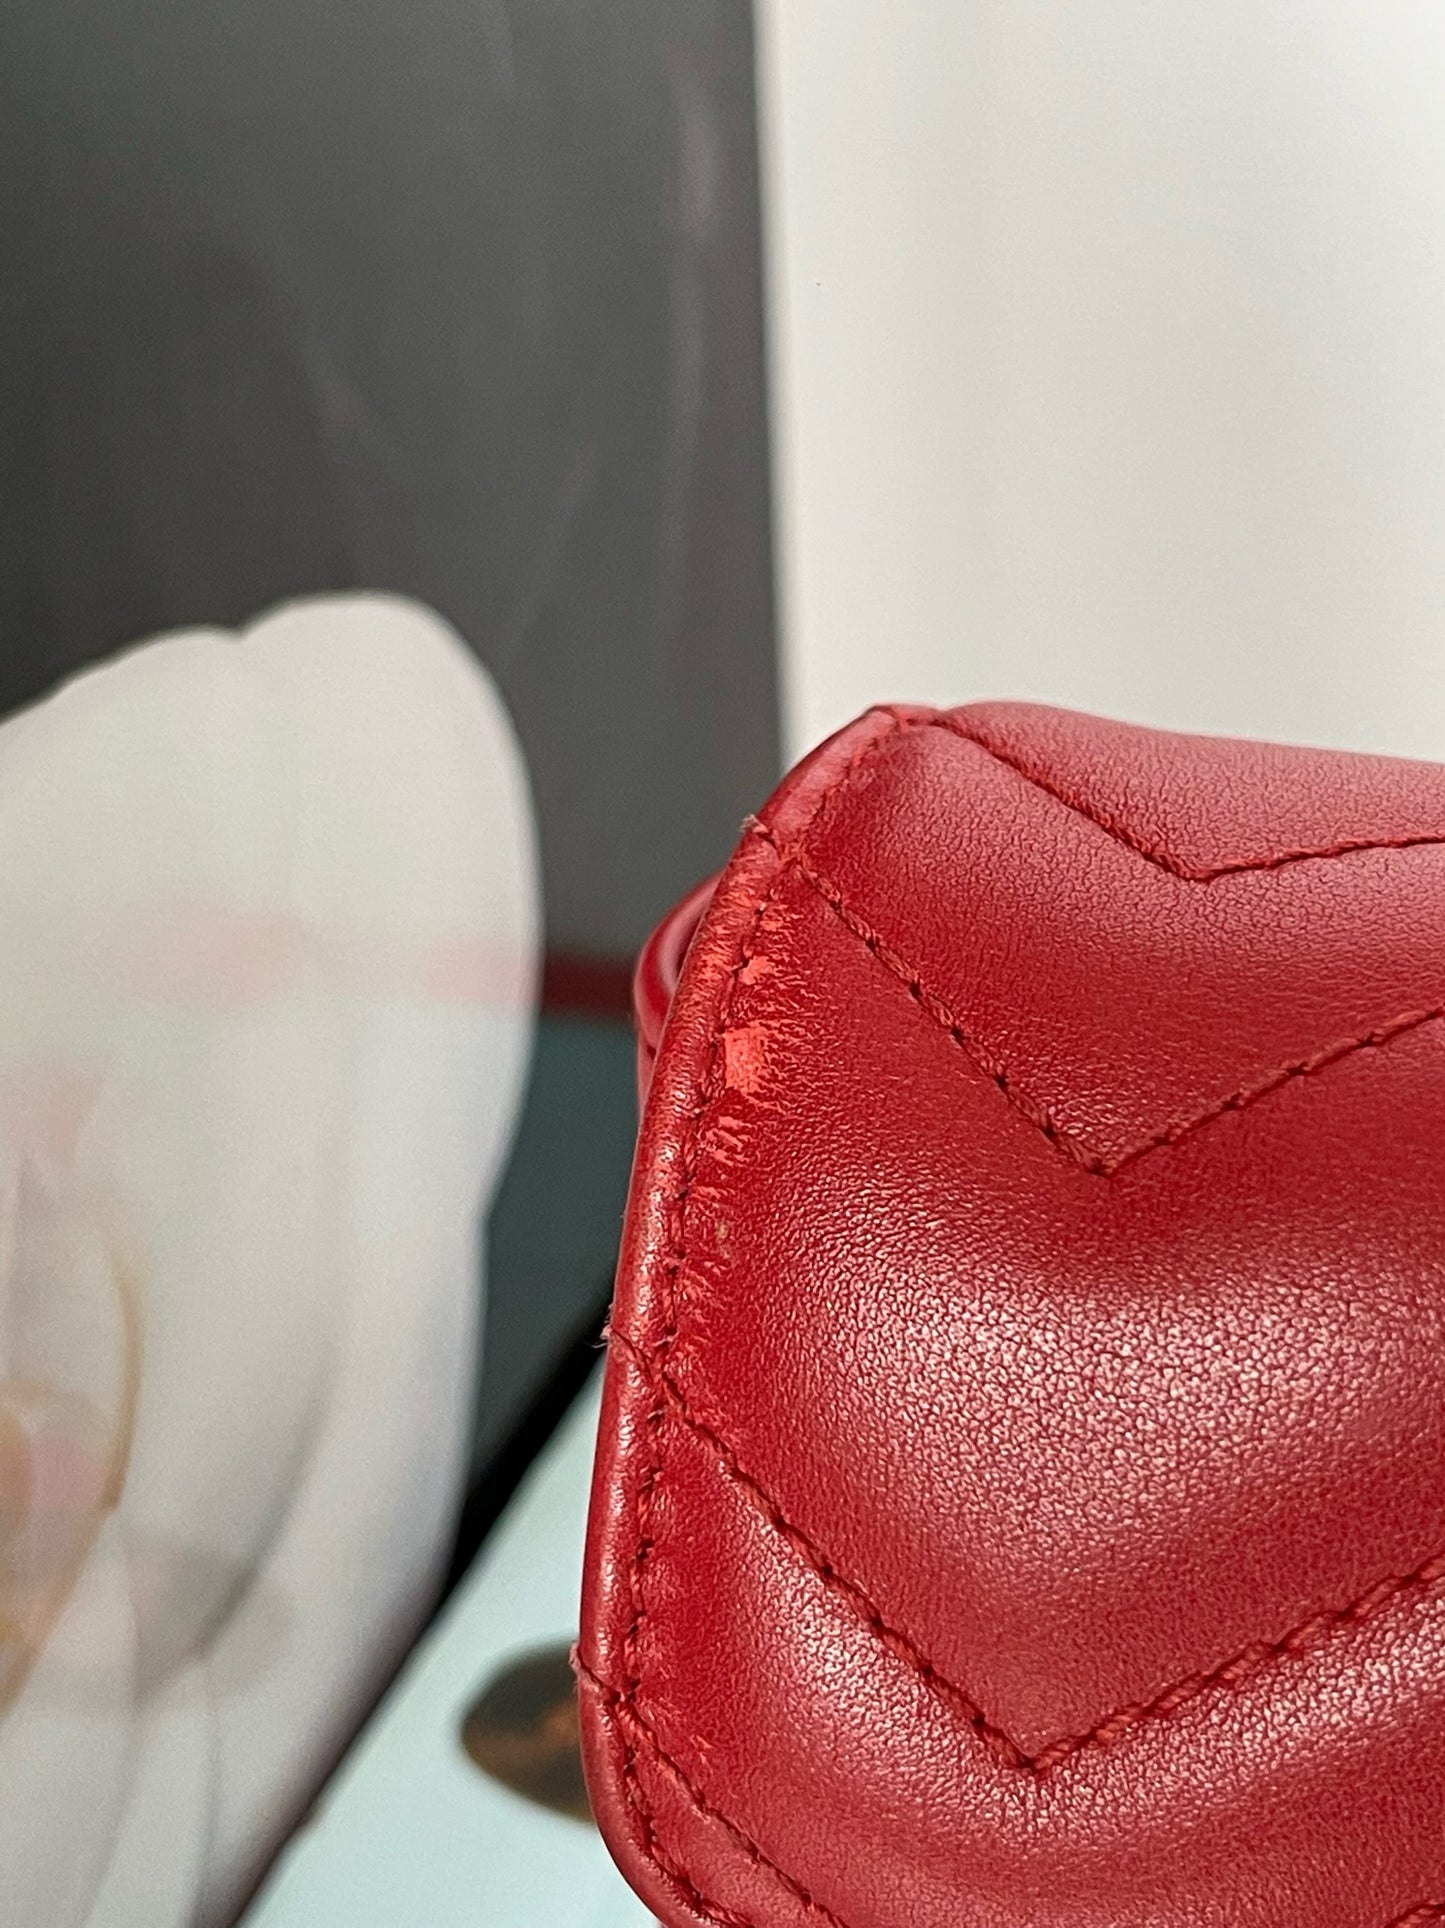 Gucci Marmont Red Super Mini Crossbody Bag